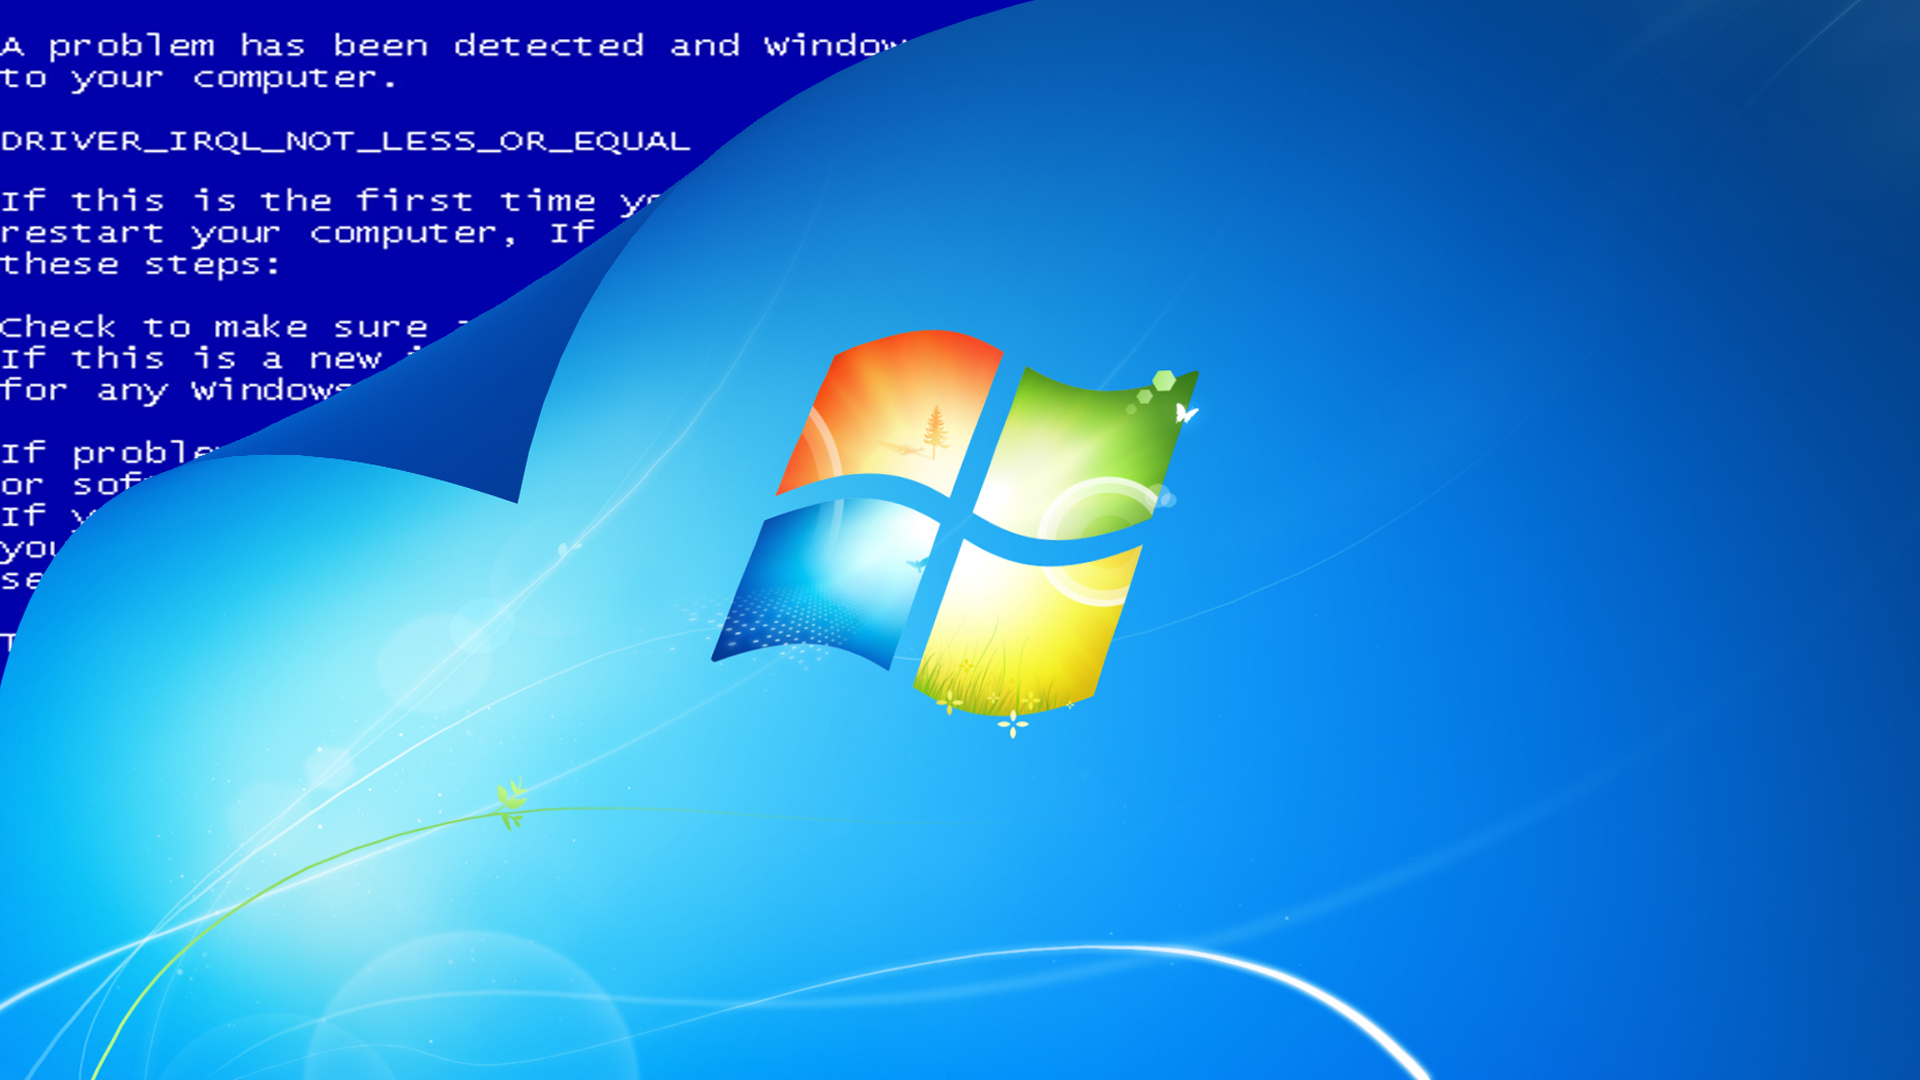 Download Funny Windows 8 Wallpaper 1920x1080 23125 Full Size 1920x1080